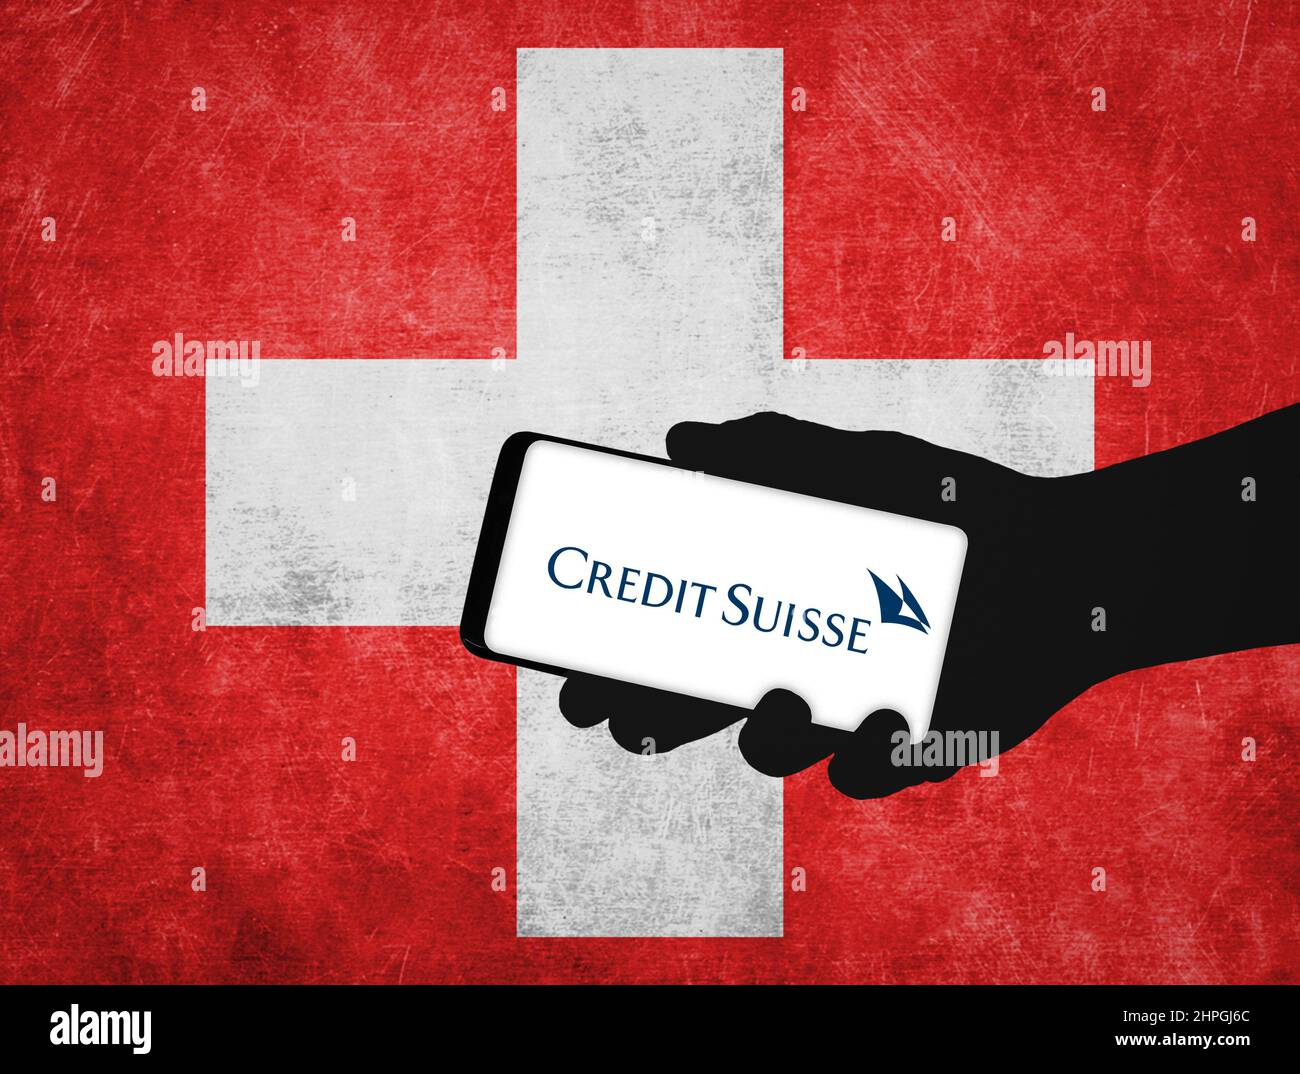 Credit Suisse - Banca d'investimento in Svizzera Foto Stock